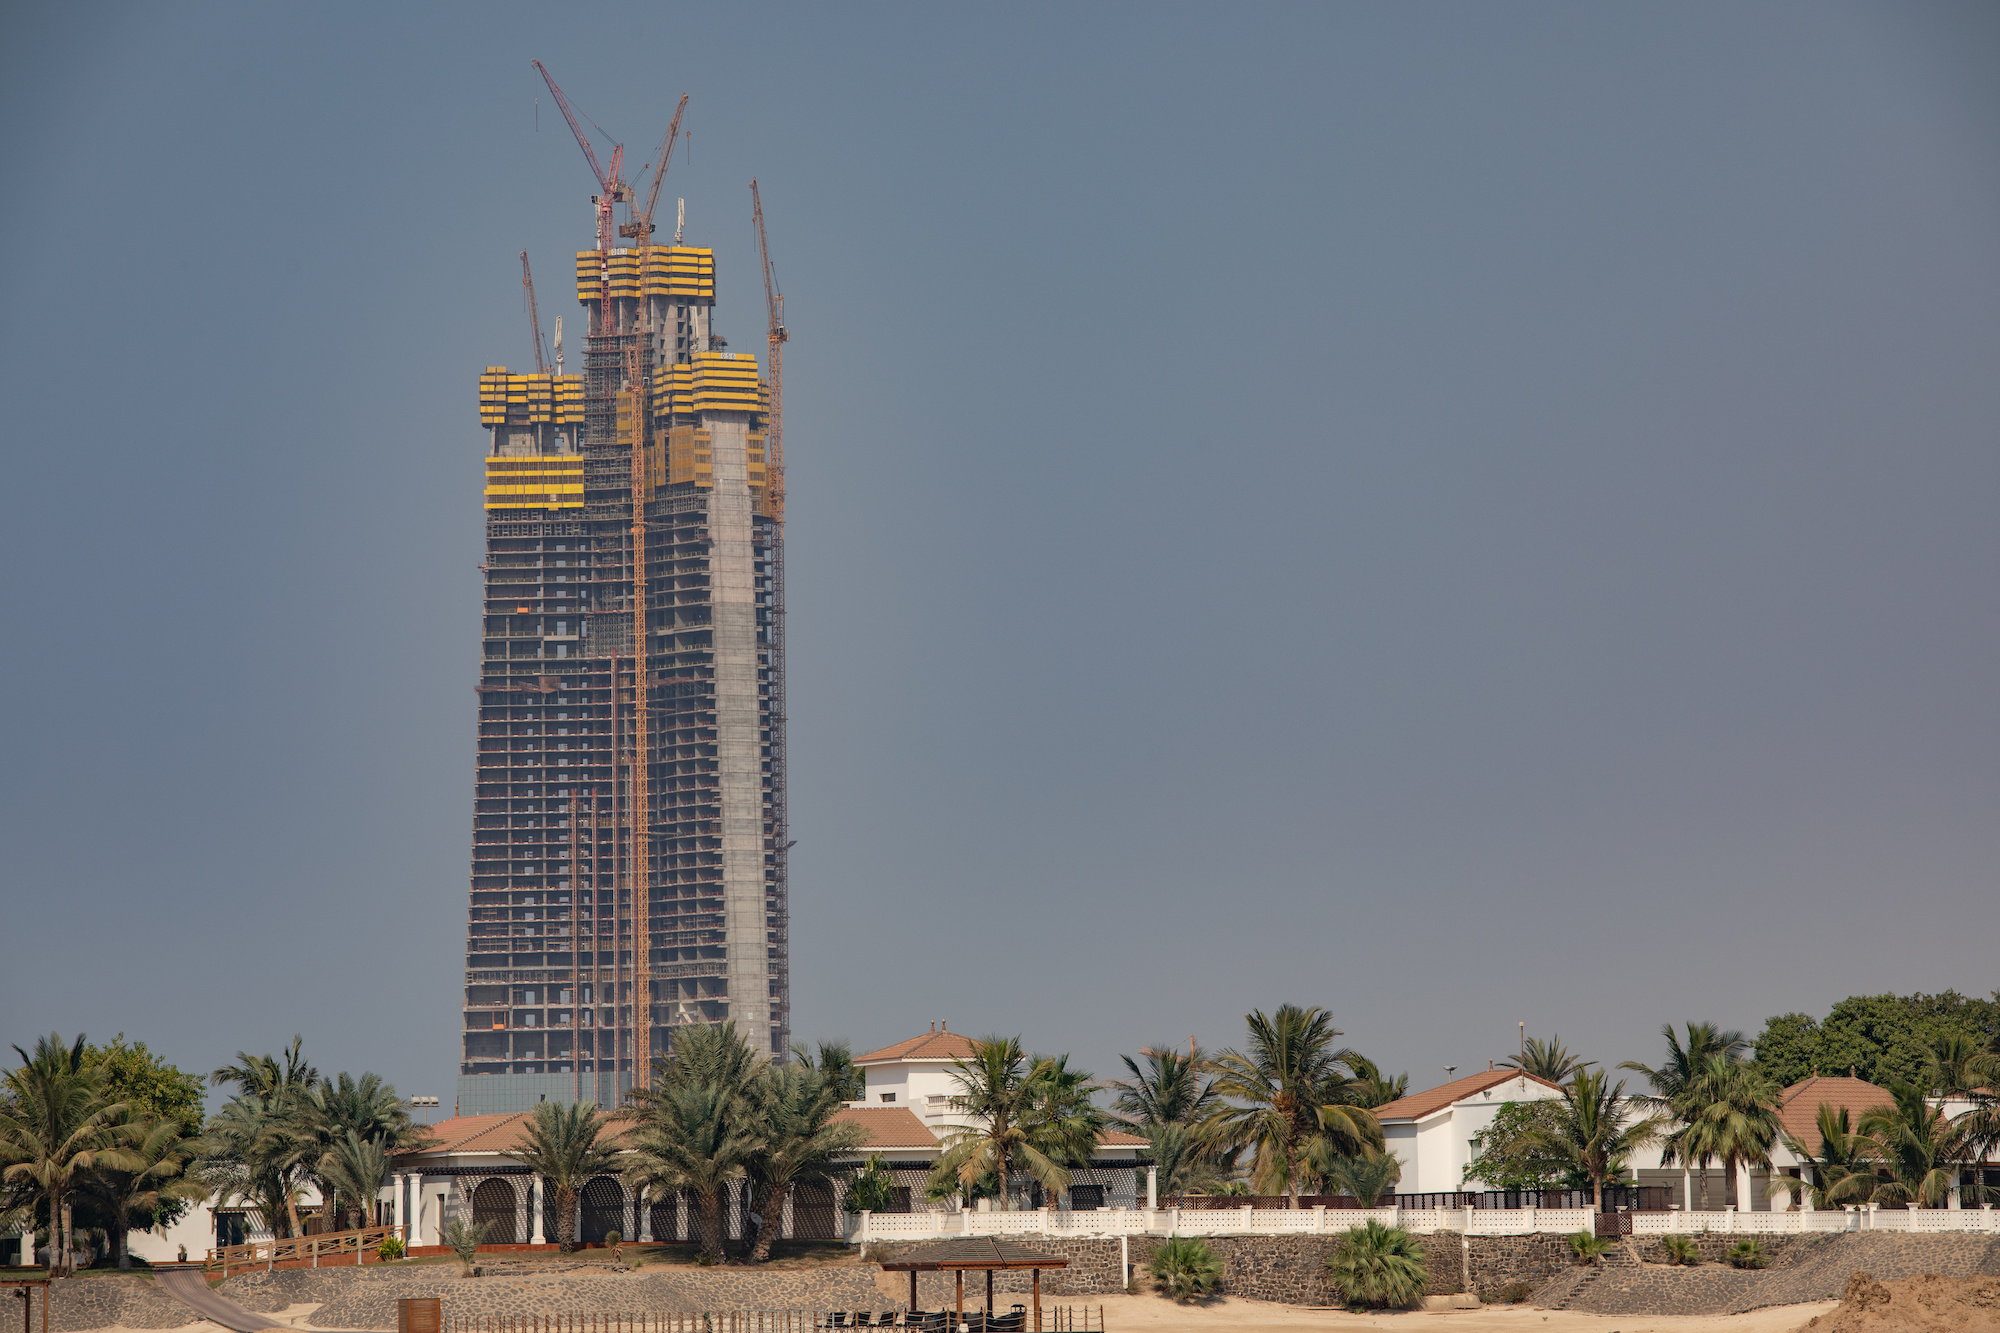 Jeddah Tower under construction in Saudi Arabia